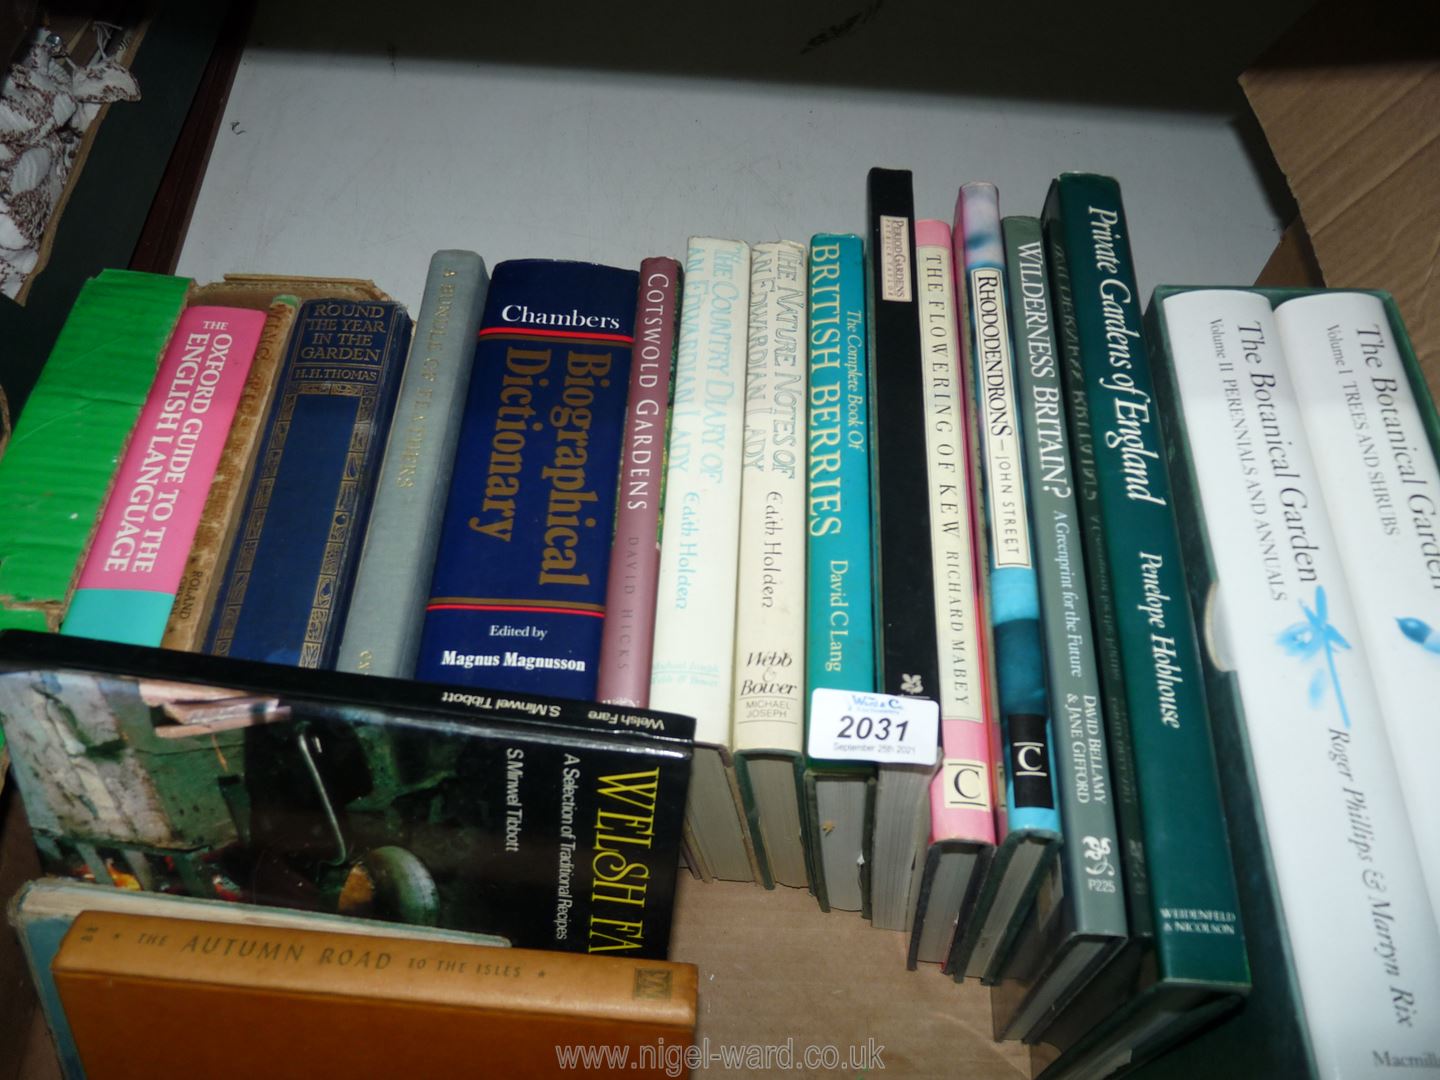 A box of books on gardening, etc.